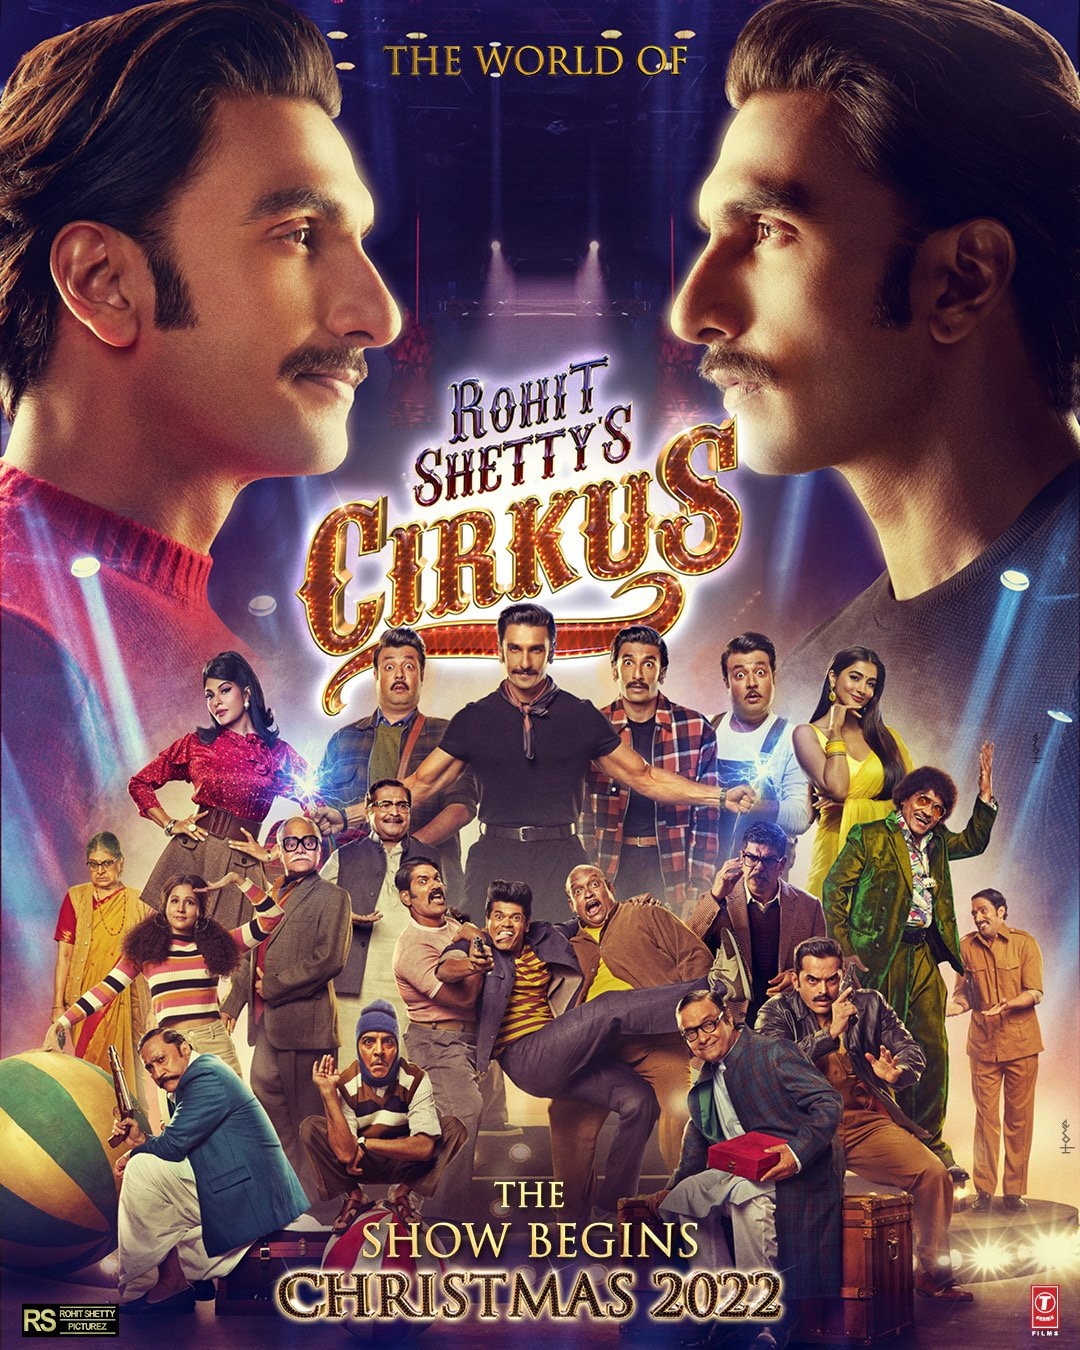 cirkus movie review rating